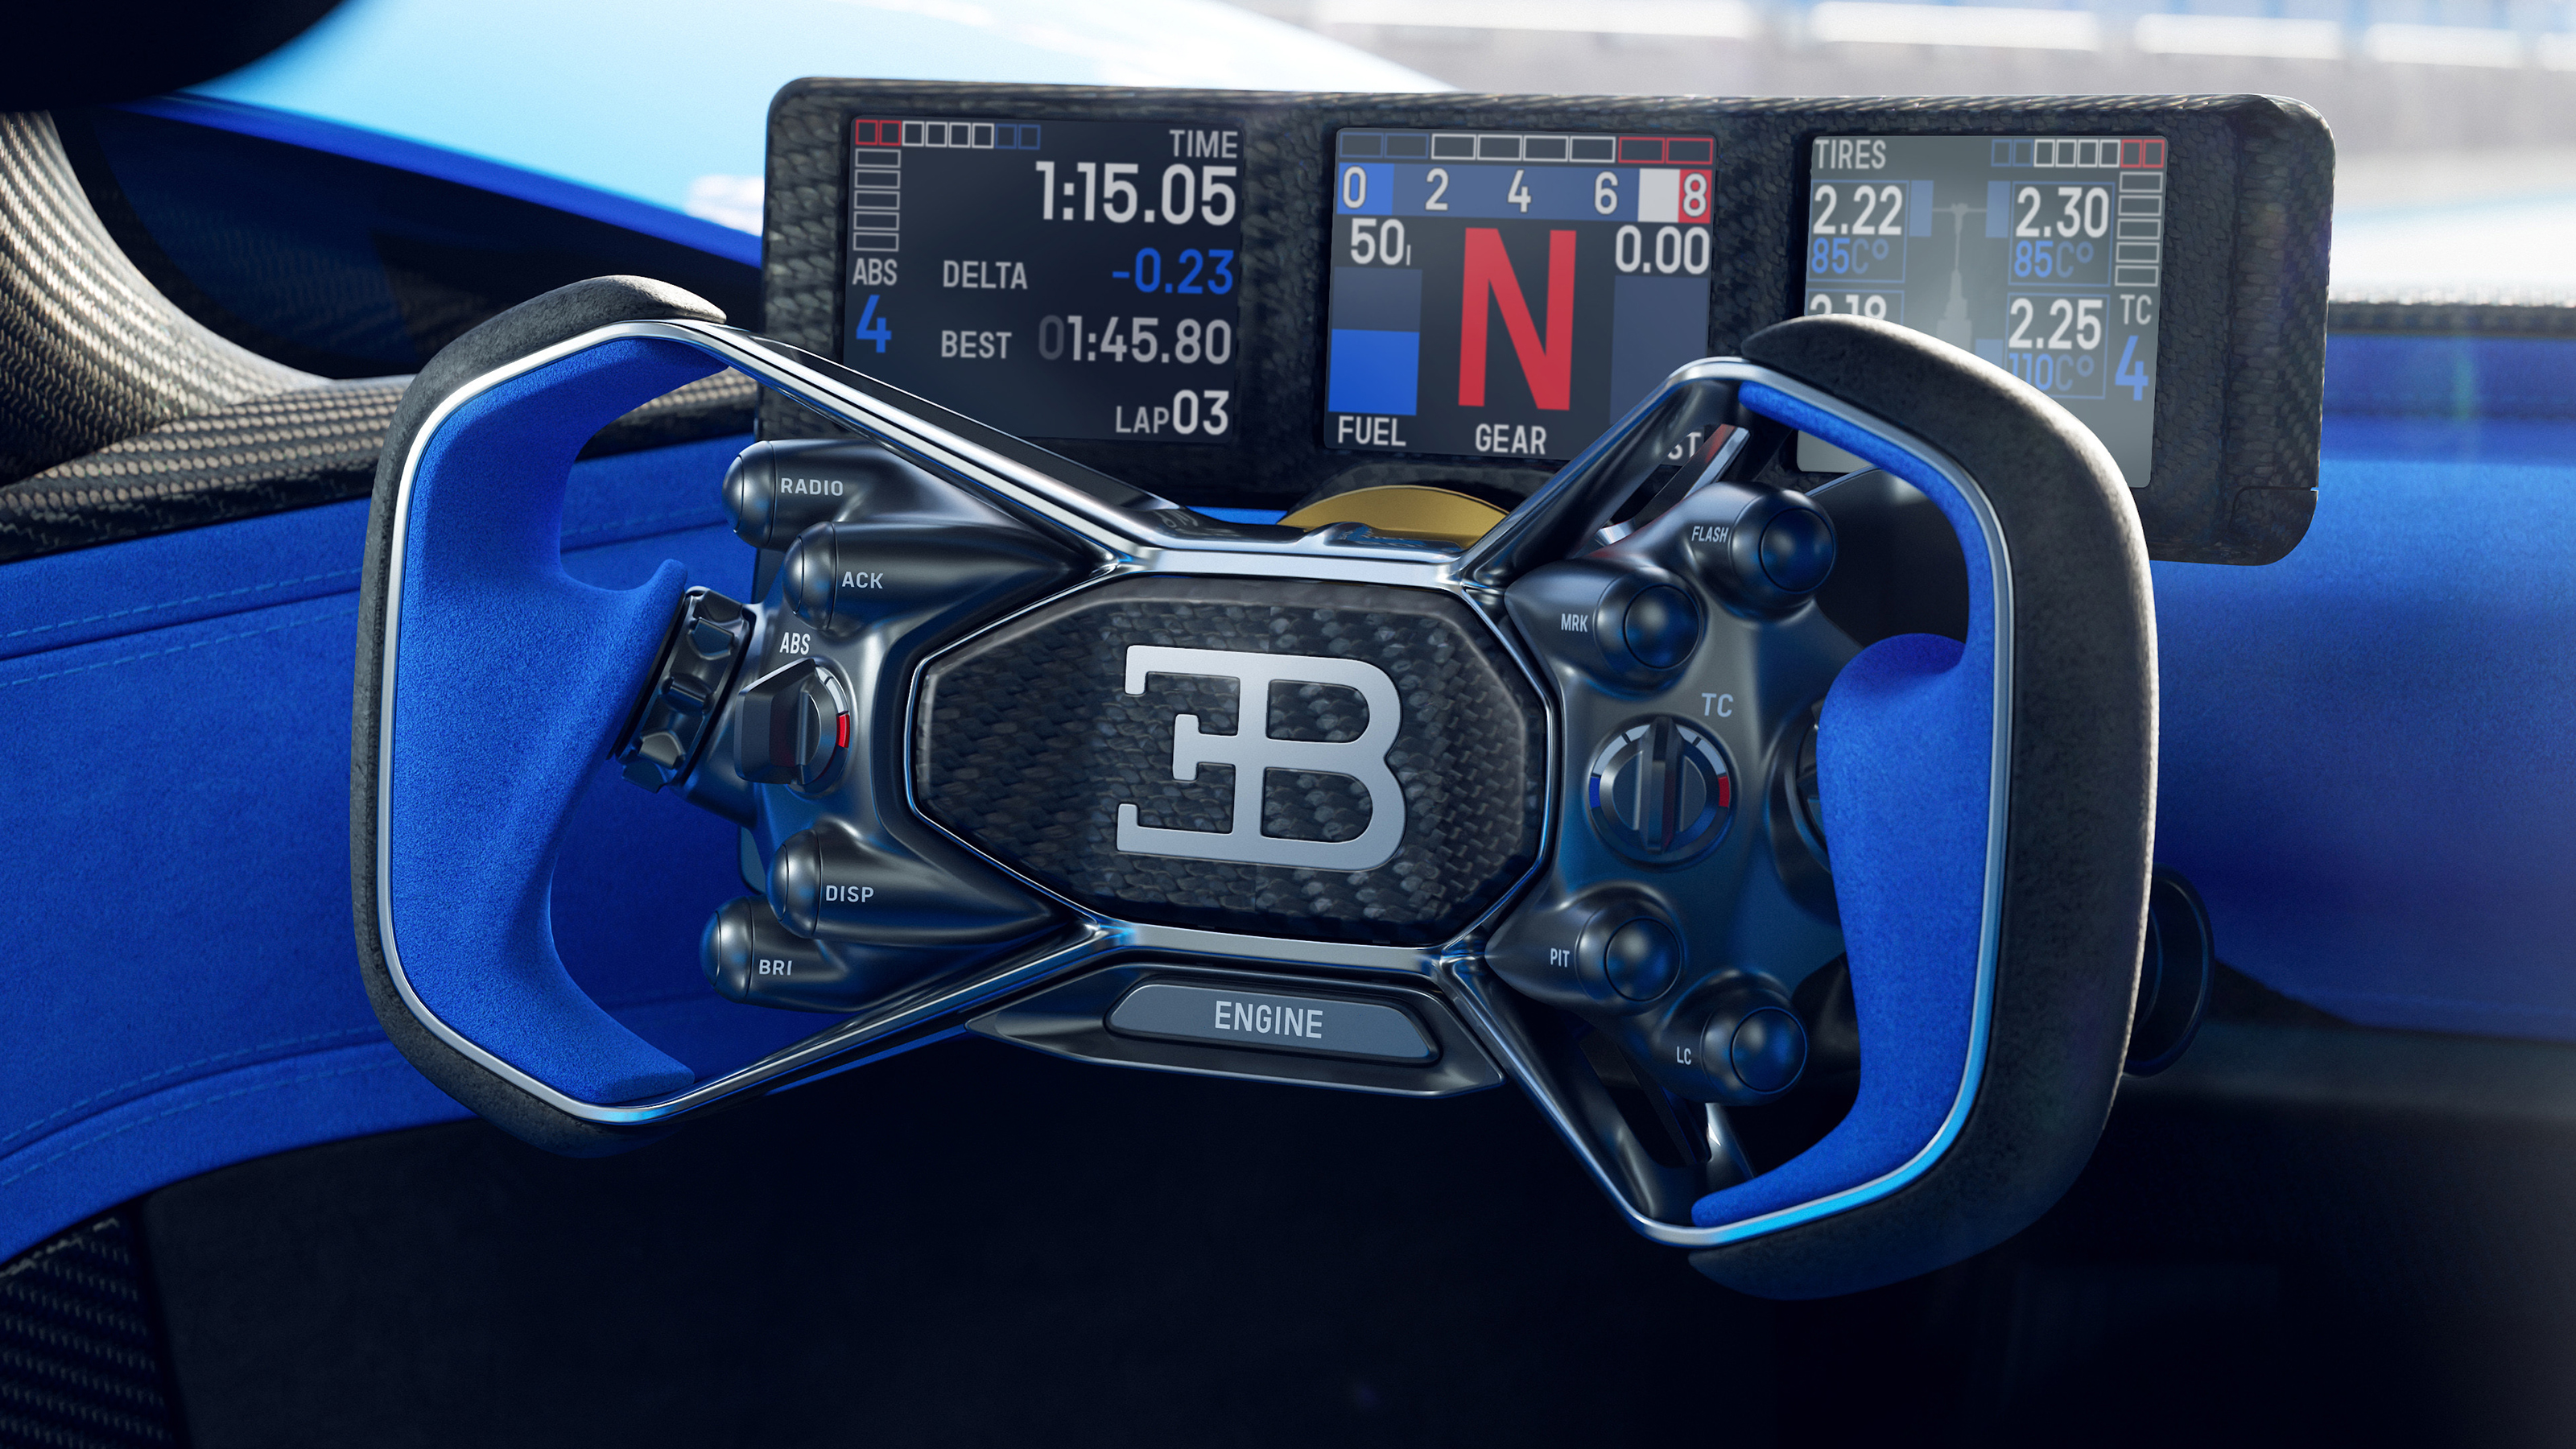 A first look inside the £3.5m Bugatti Bolide hypercar